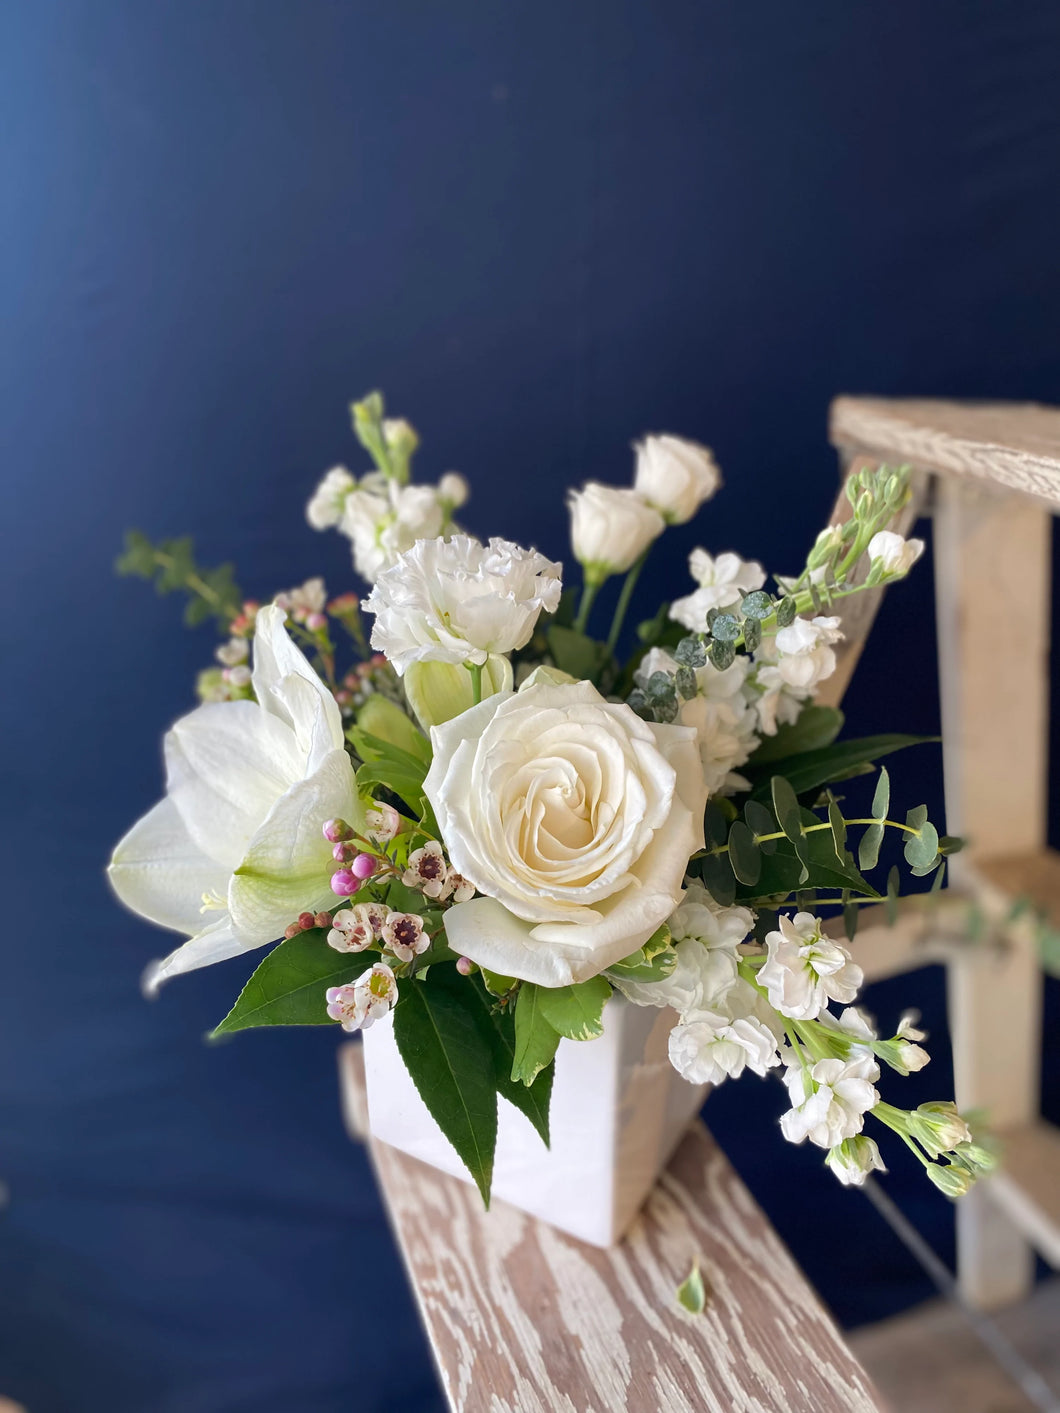 Fleurish White and Green Vase Arrangement - Large